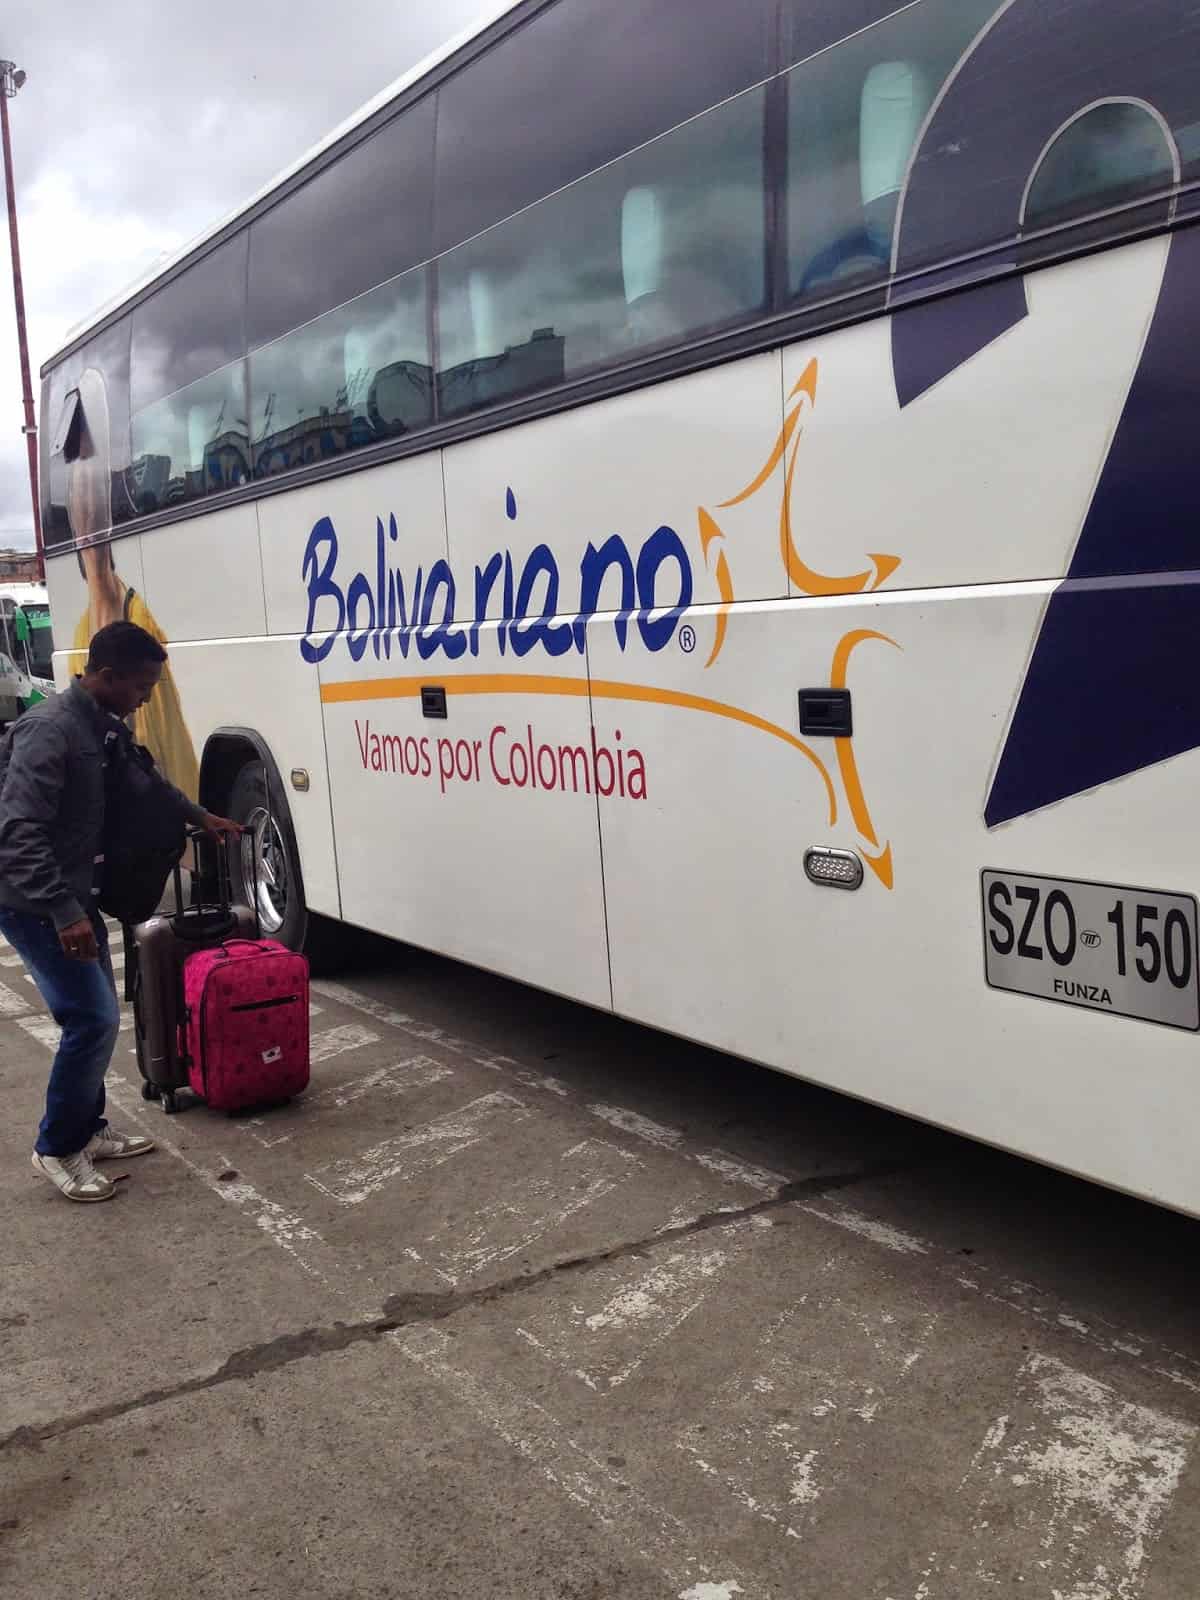 Bolivariano bus in Ipiales, Colombia